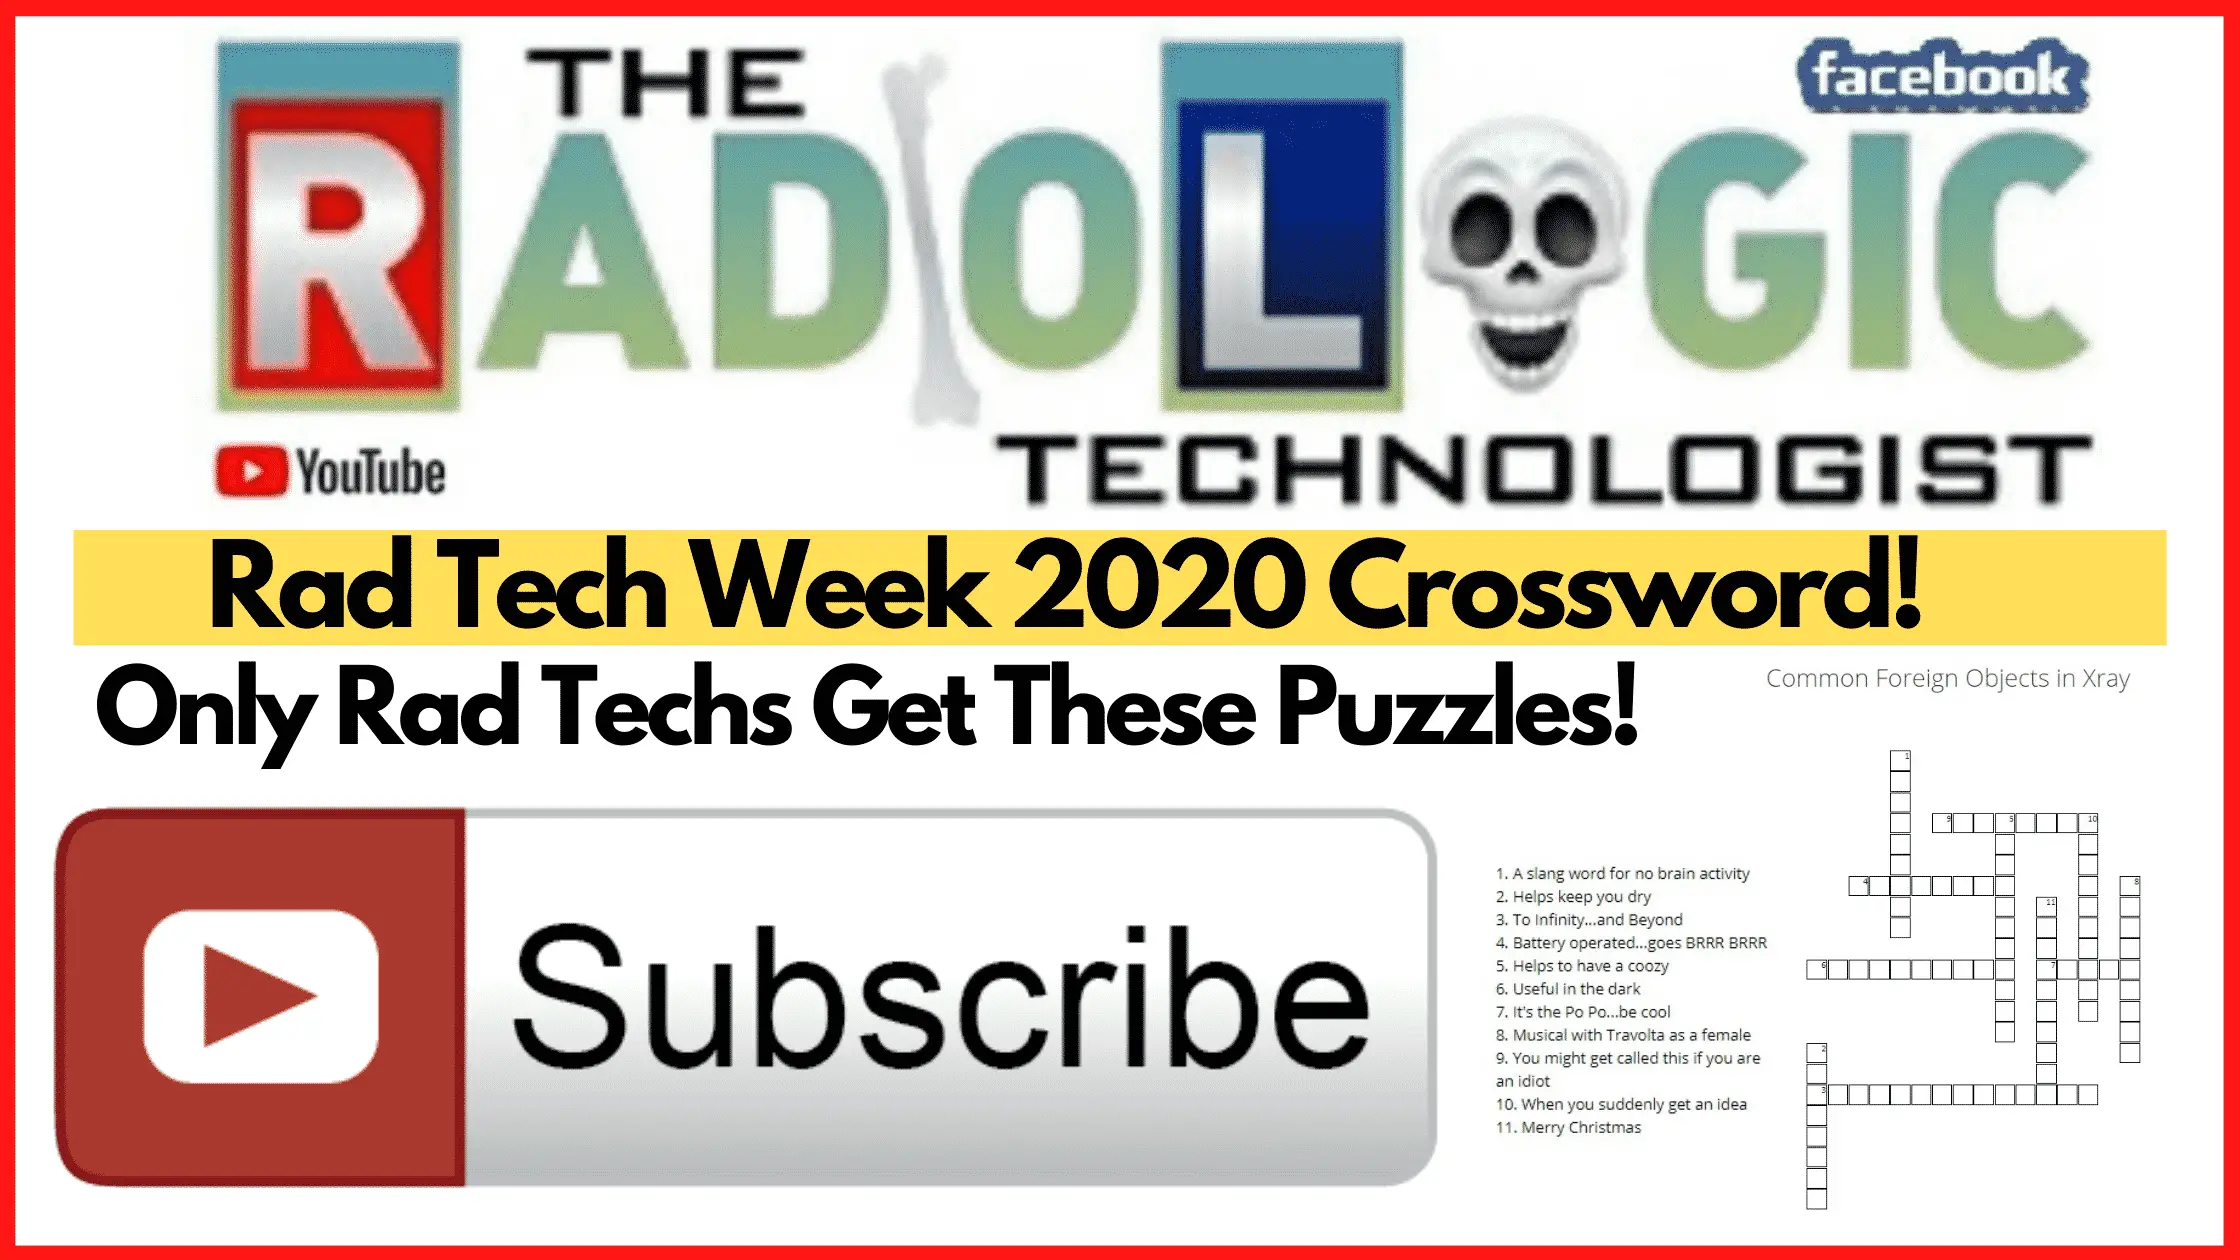 Rad Tech Week 2020 Crossword Puzzle 2020